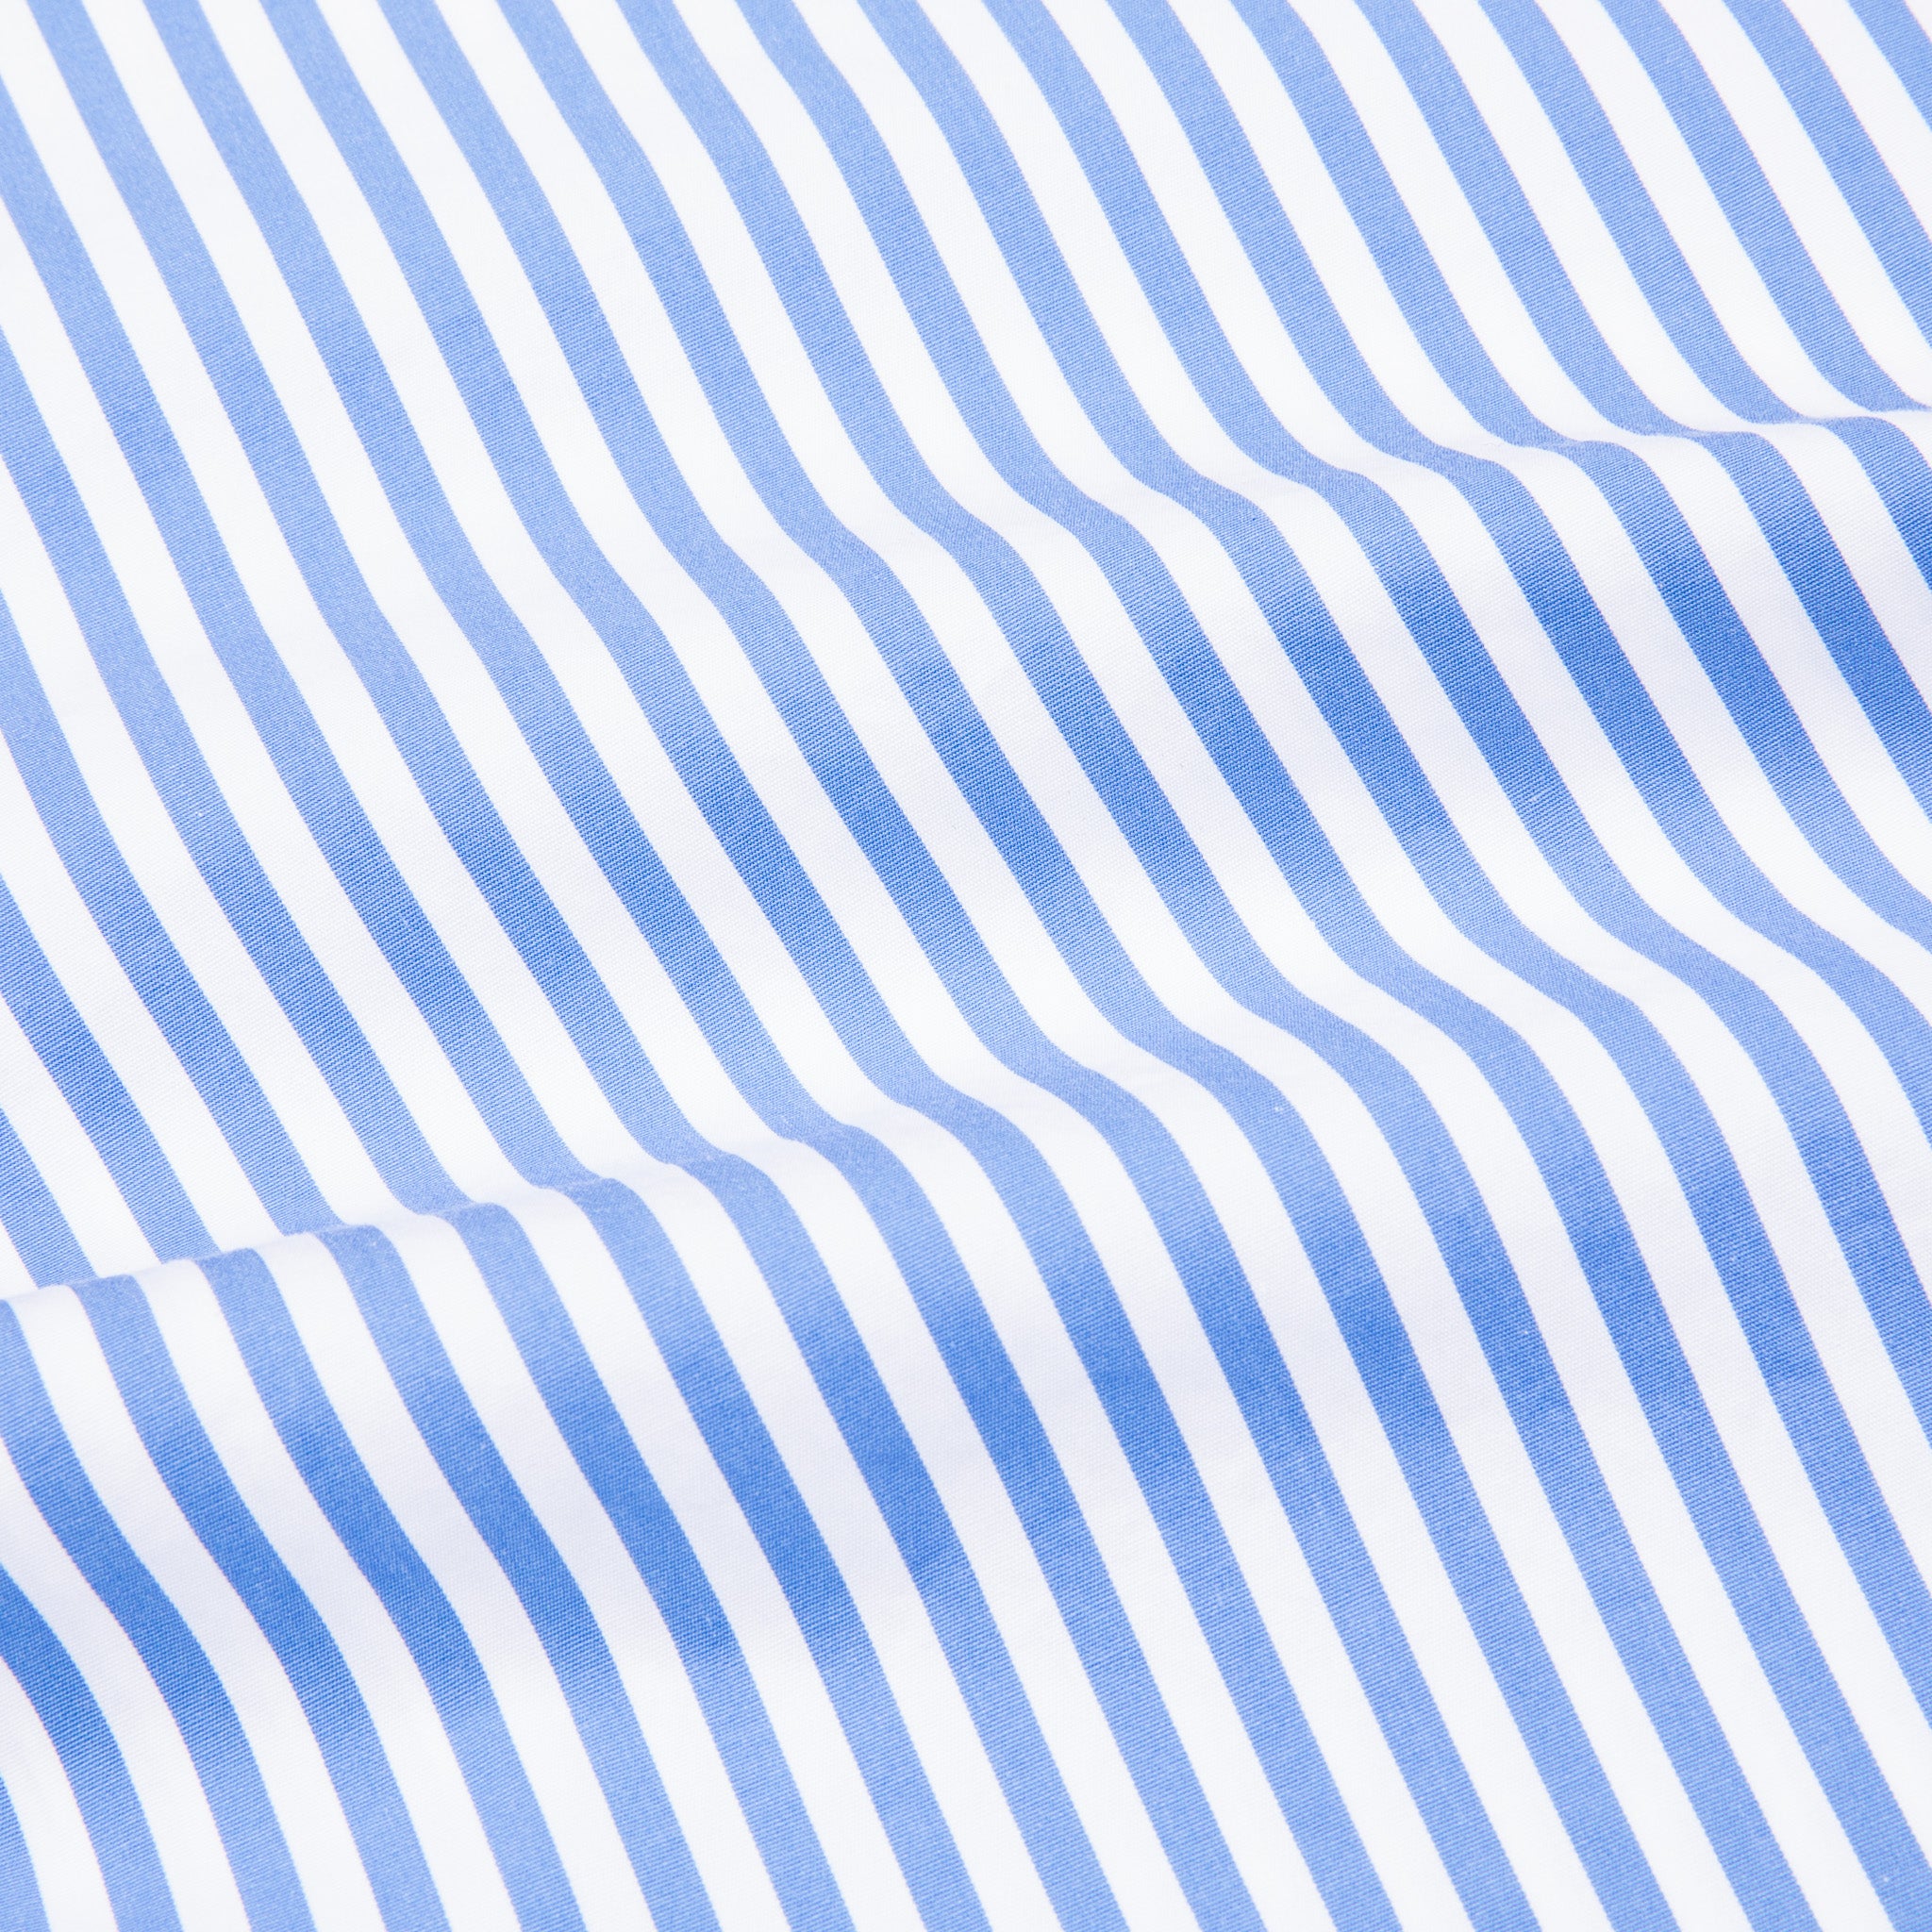 Finamore Gaeta Fit Collo Sergio Bengal Stripe Shirt Blu Medio